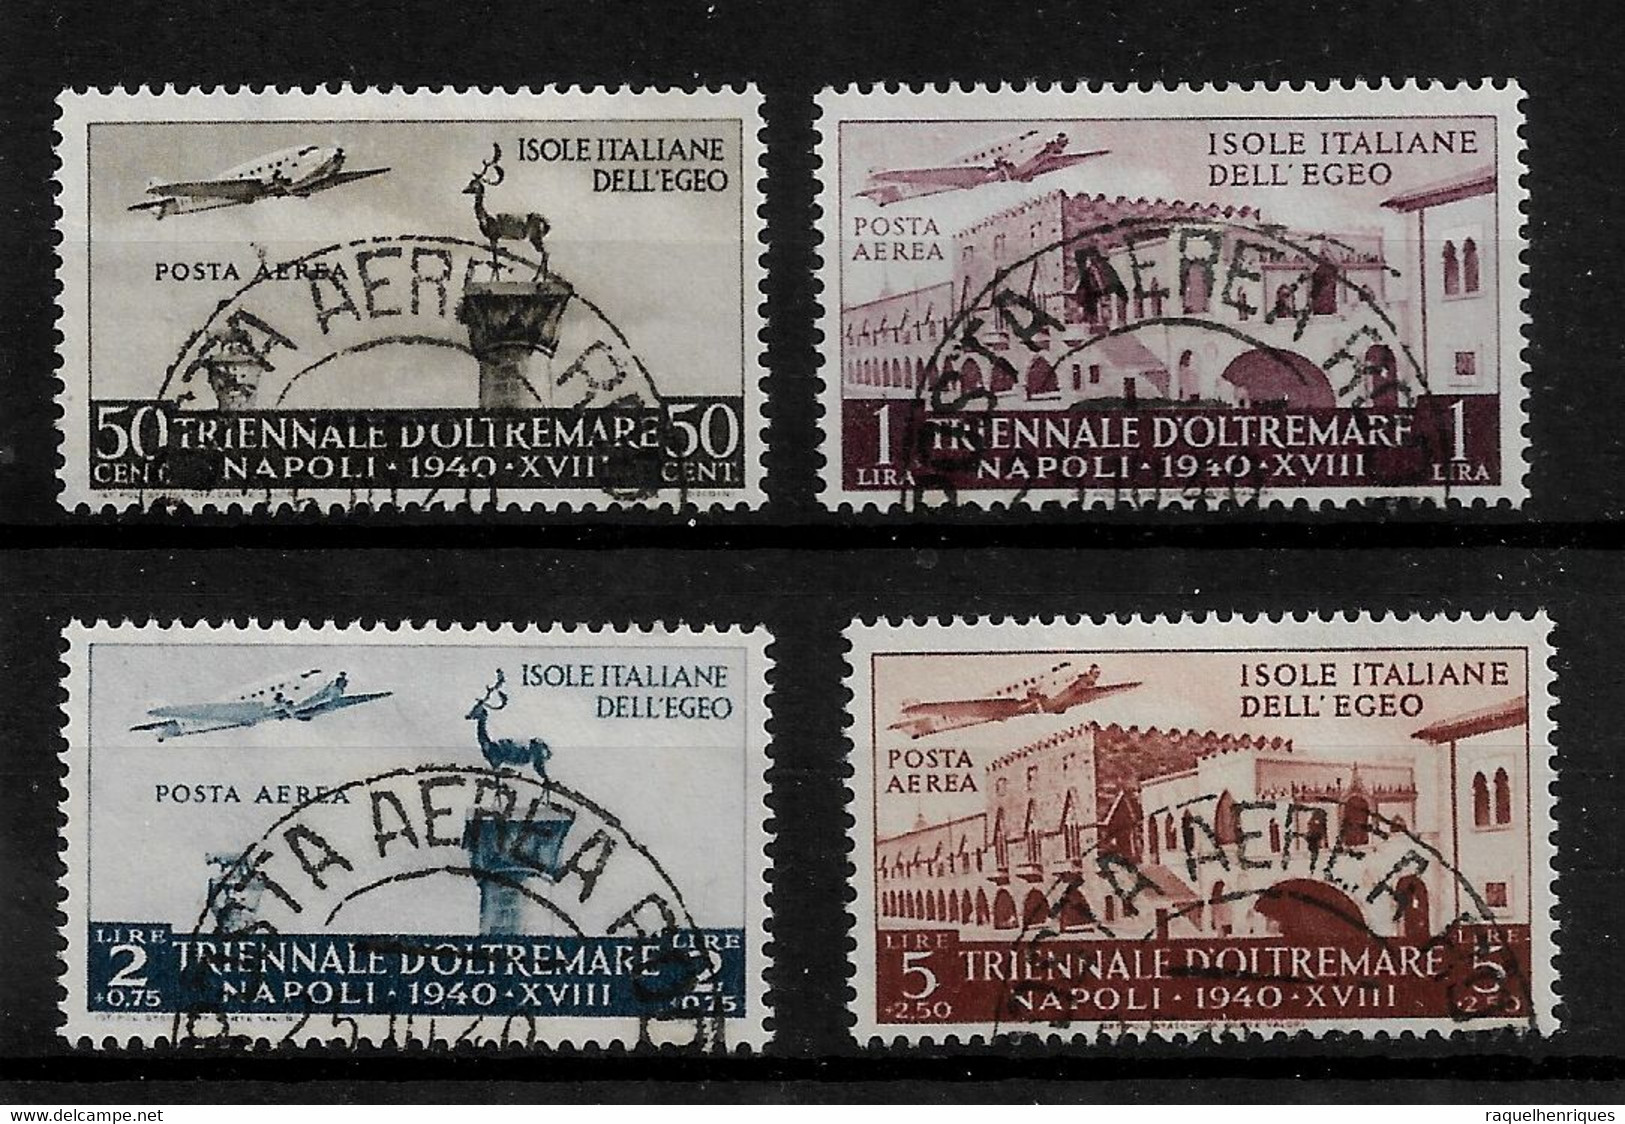 ITALY STAMP - AEGEAN ISLANDS - 1940 Airmail - Exhibition In Napoli SET USED (BA5#88) - Egée (Autonome Adm.)